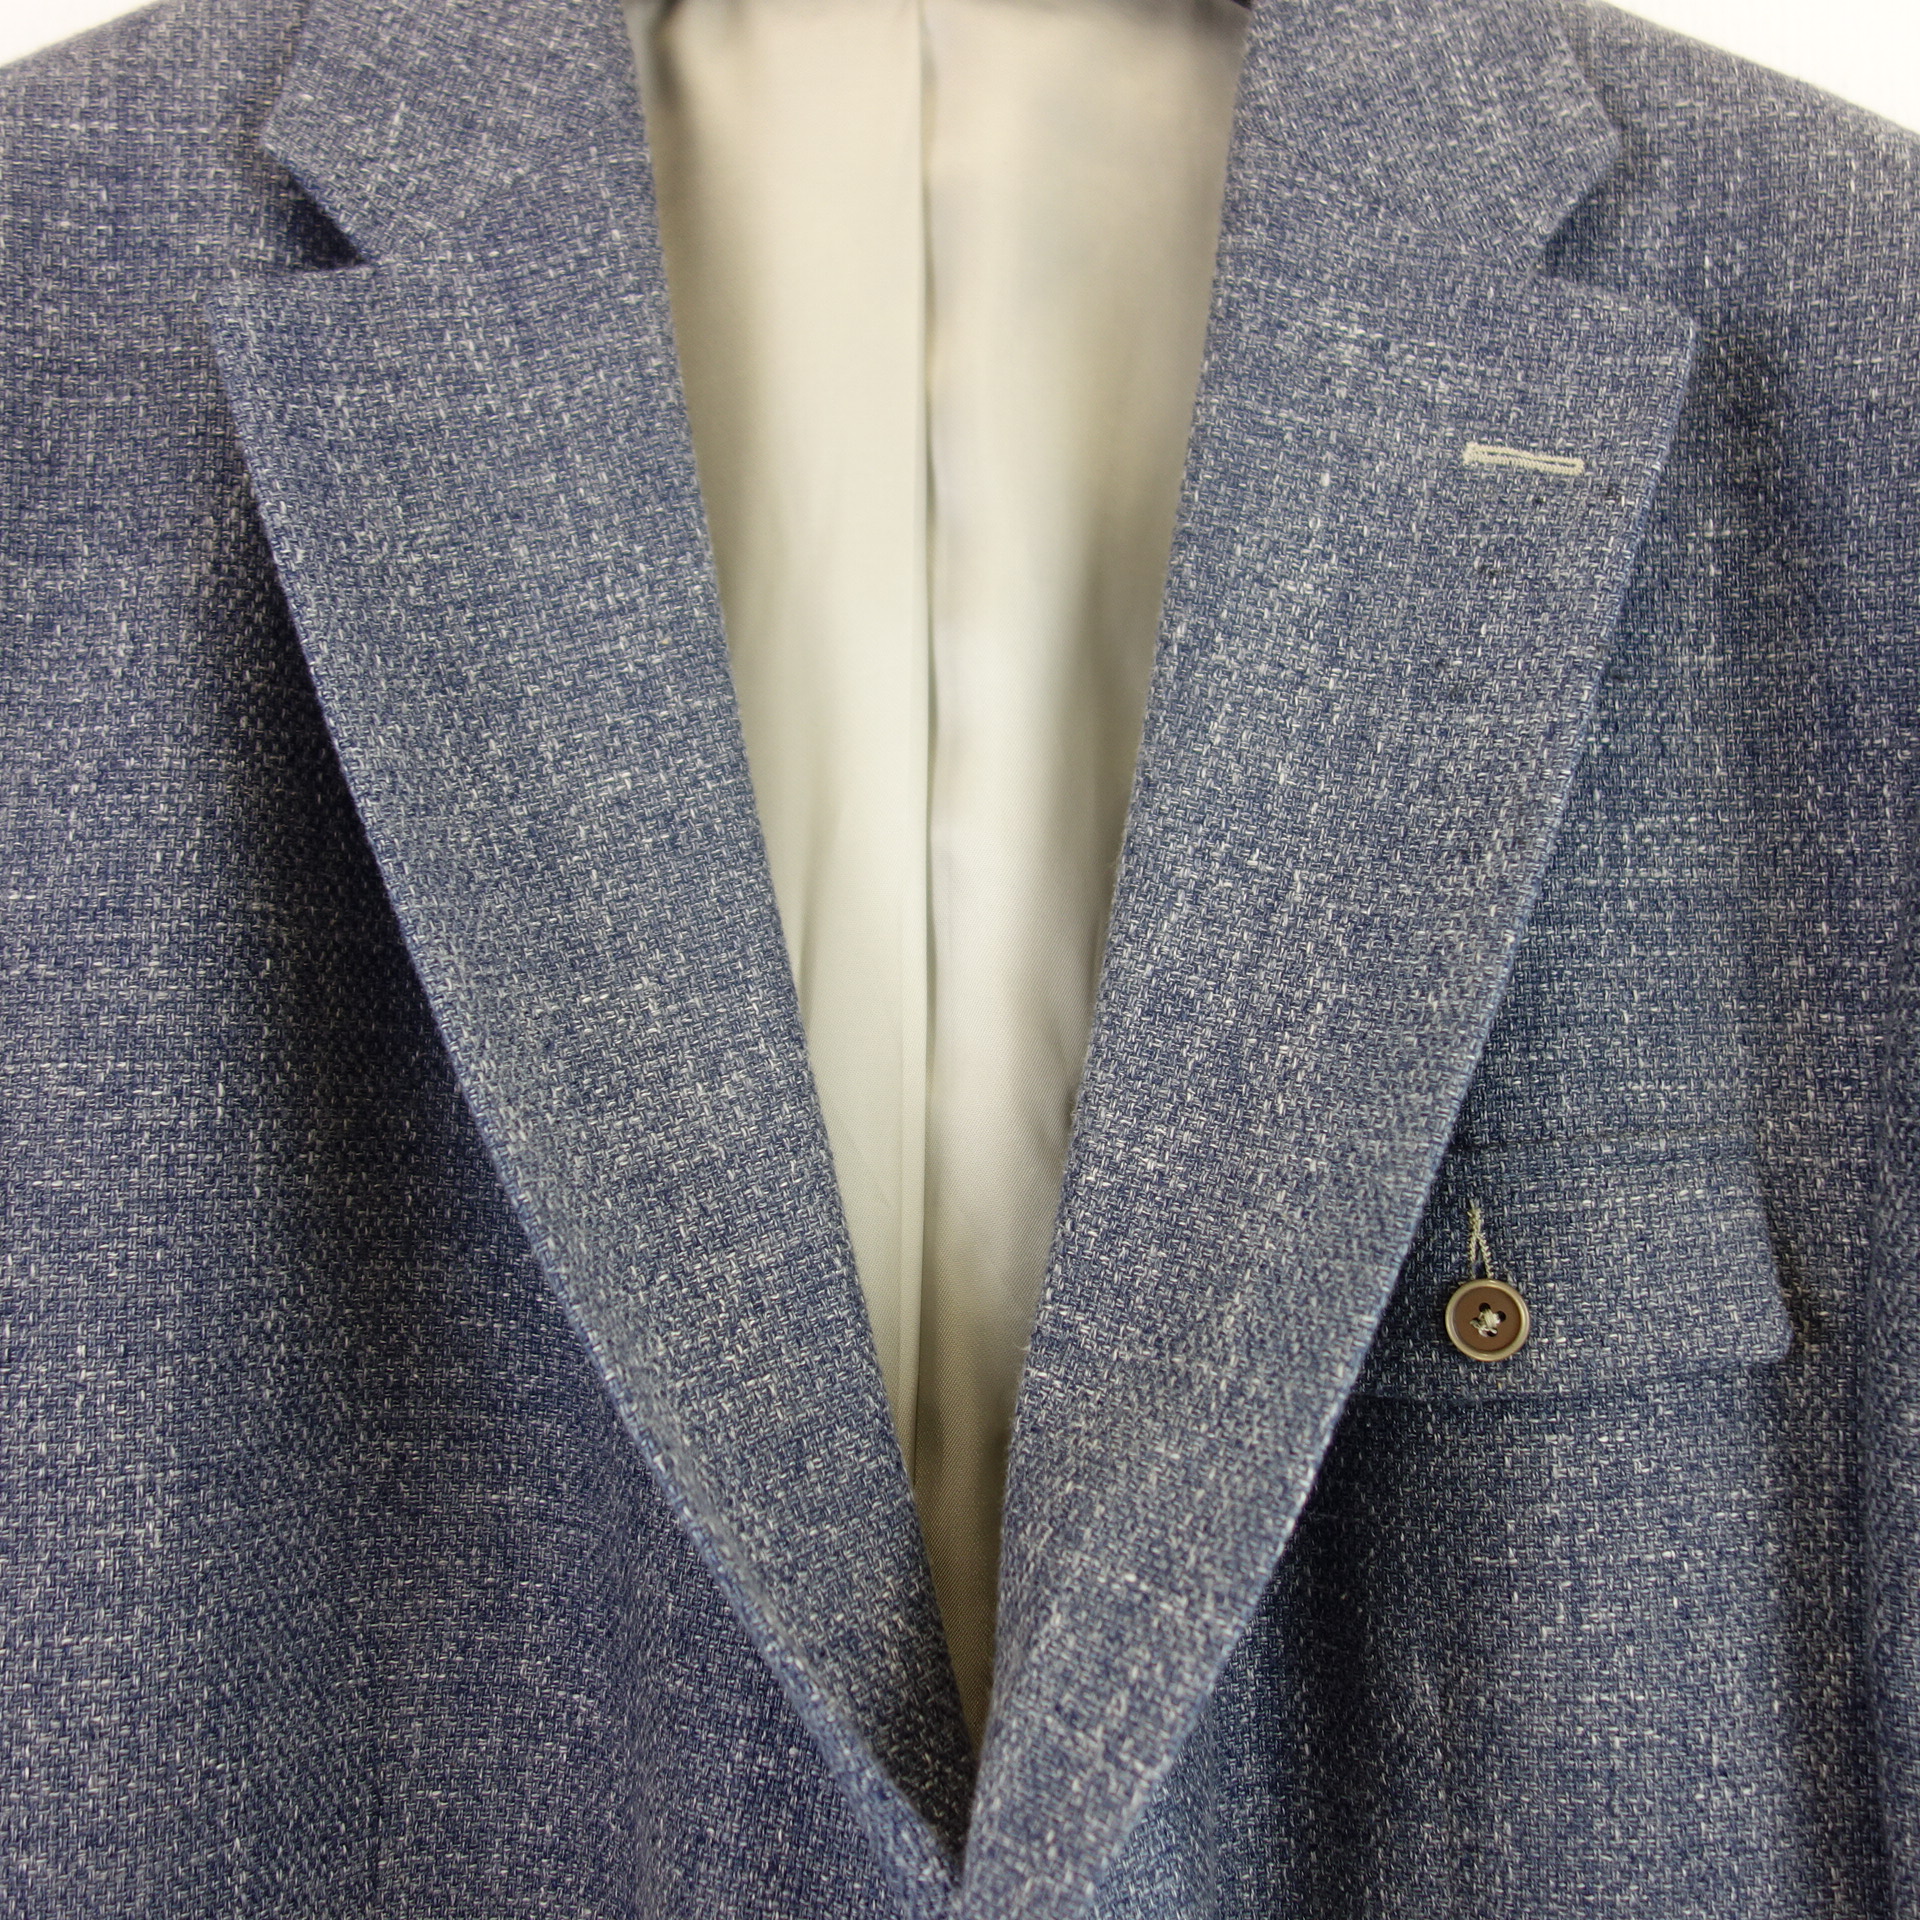 CIRCLE OF GENTLEMEN Marzotto Herren Sakko Jacke Jacket Blau Baumwolle 58 Modell Aris